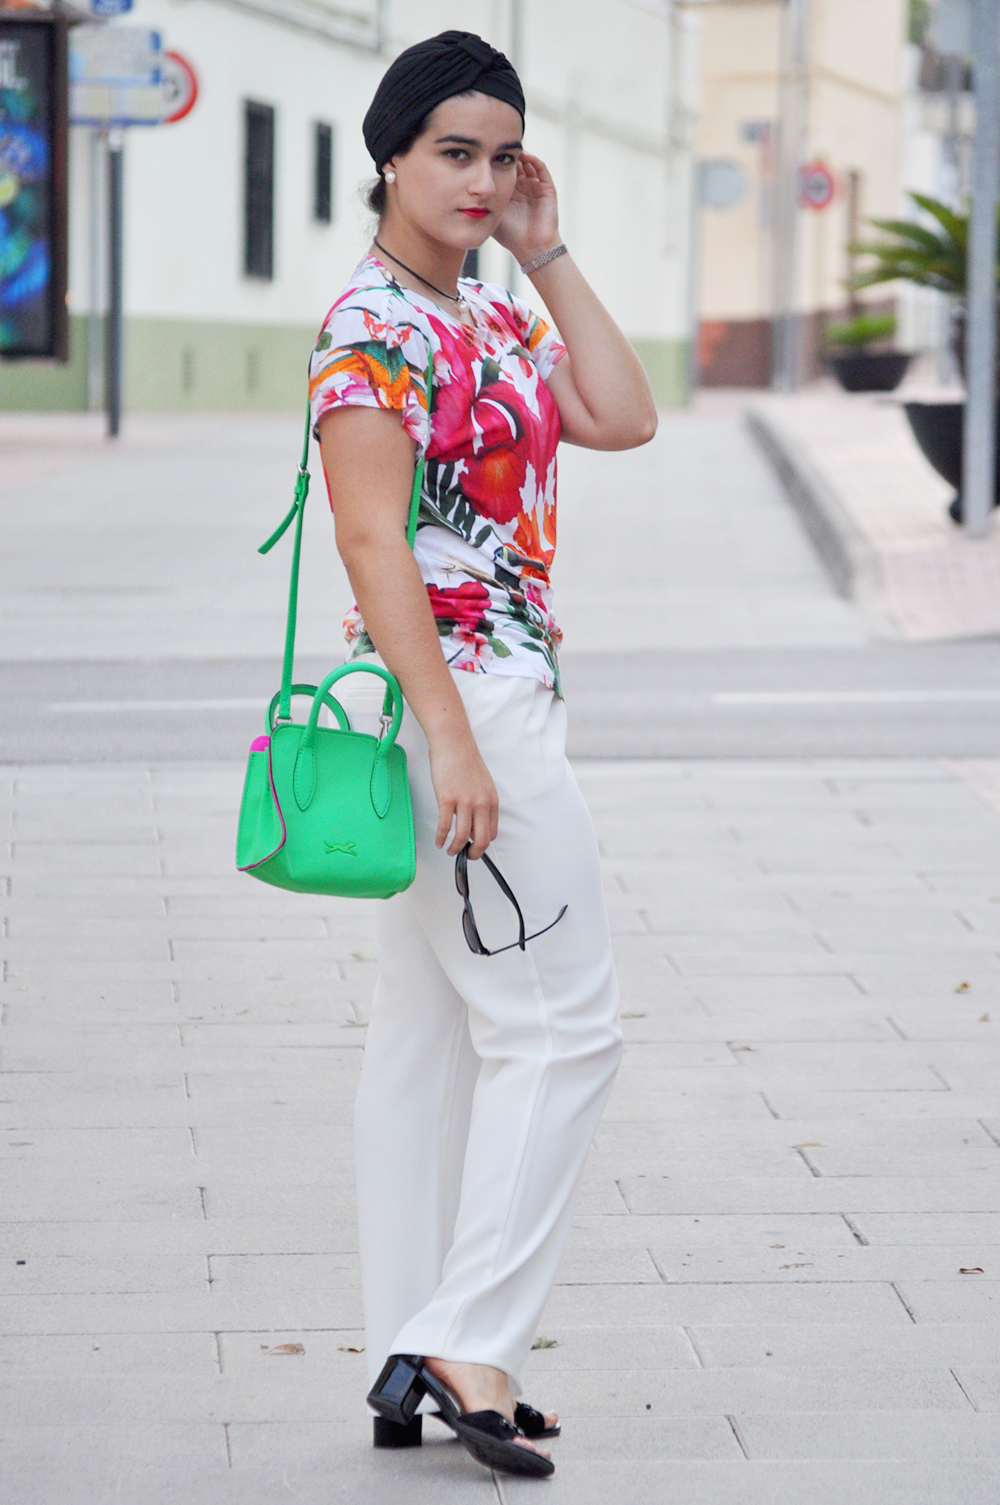 something fashion valencia blogger moda estilo, how to wear a turbant, bimba y lola neón green bag, ted baker T-shirt, white dress mango pants how to style rock total white floral outfit